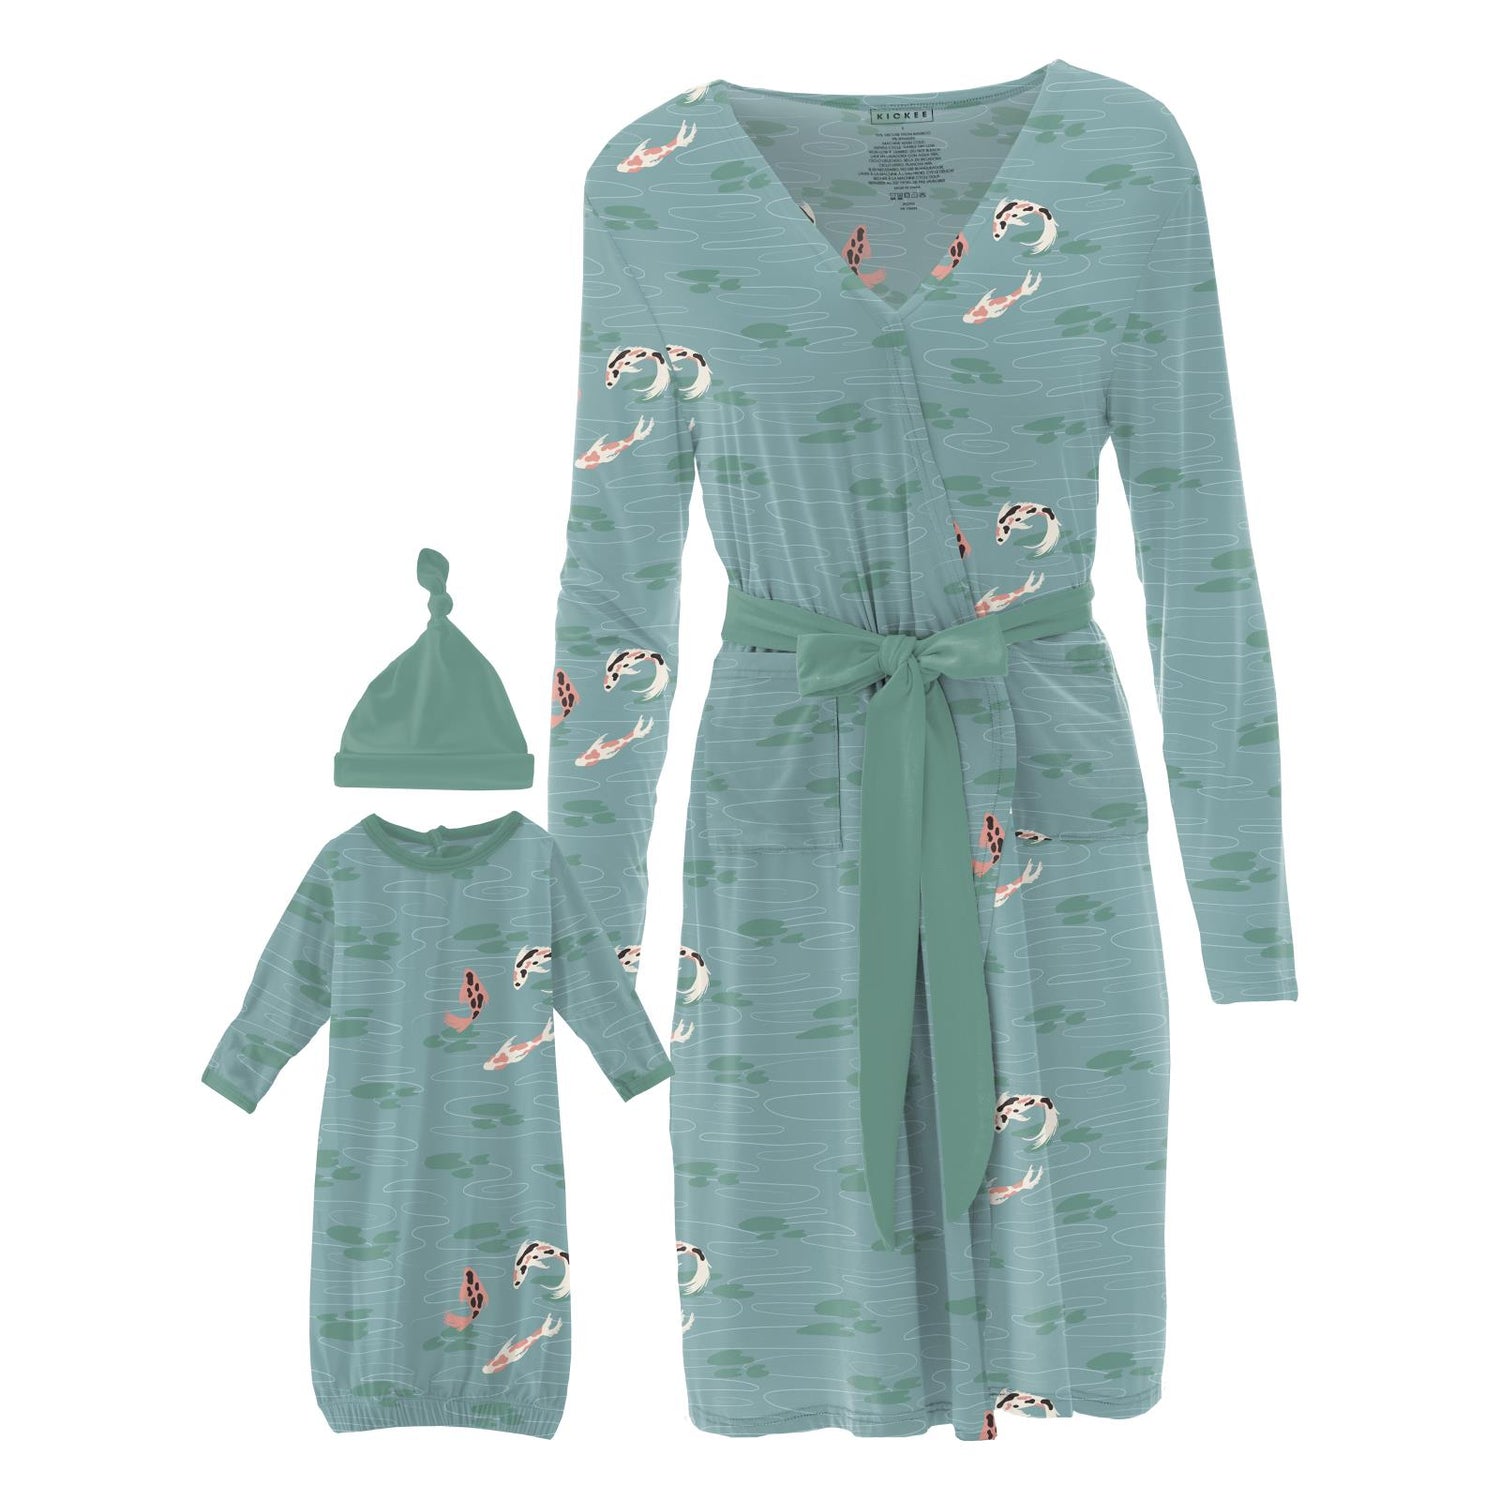 Women's Maternity/Nursing Robe & Layette Gown Set in Jade Koi Pond